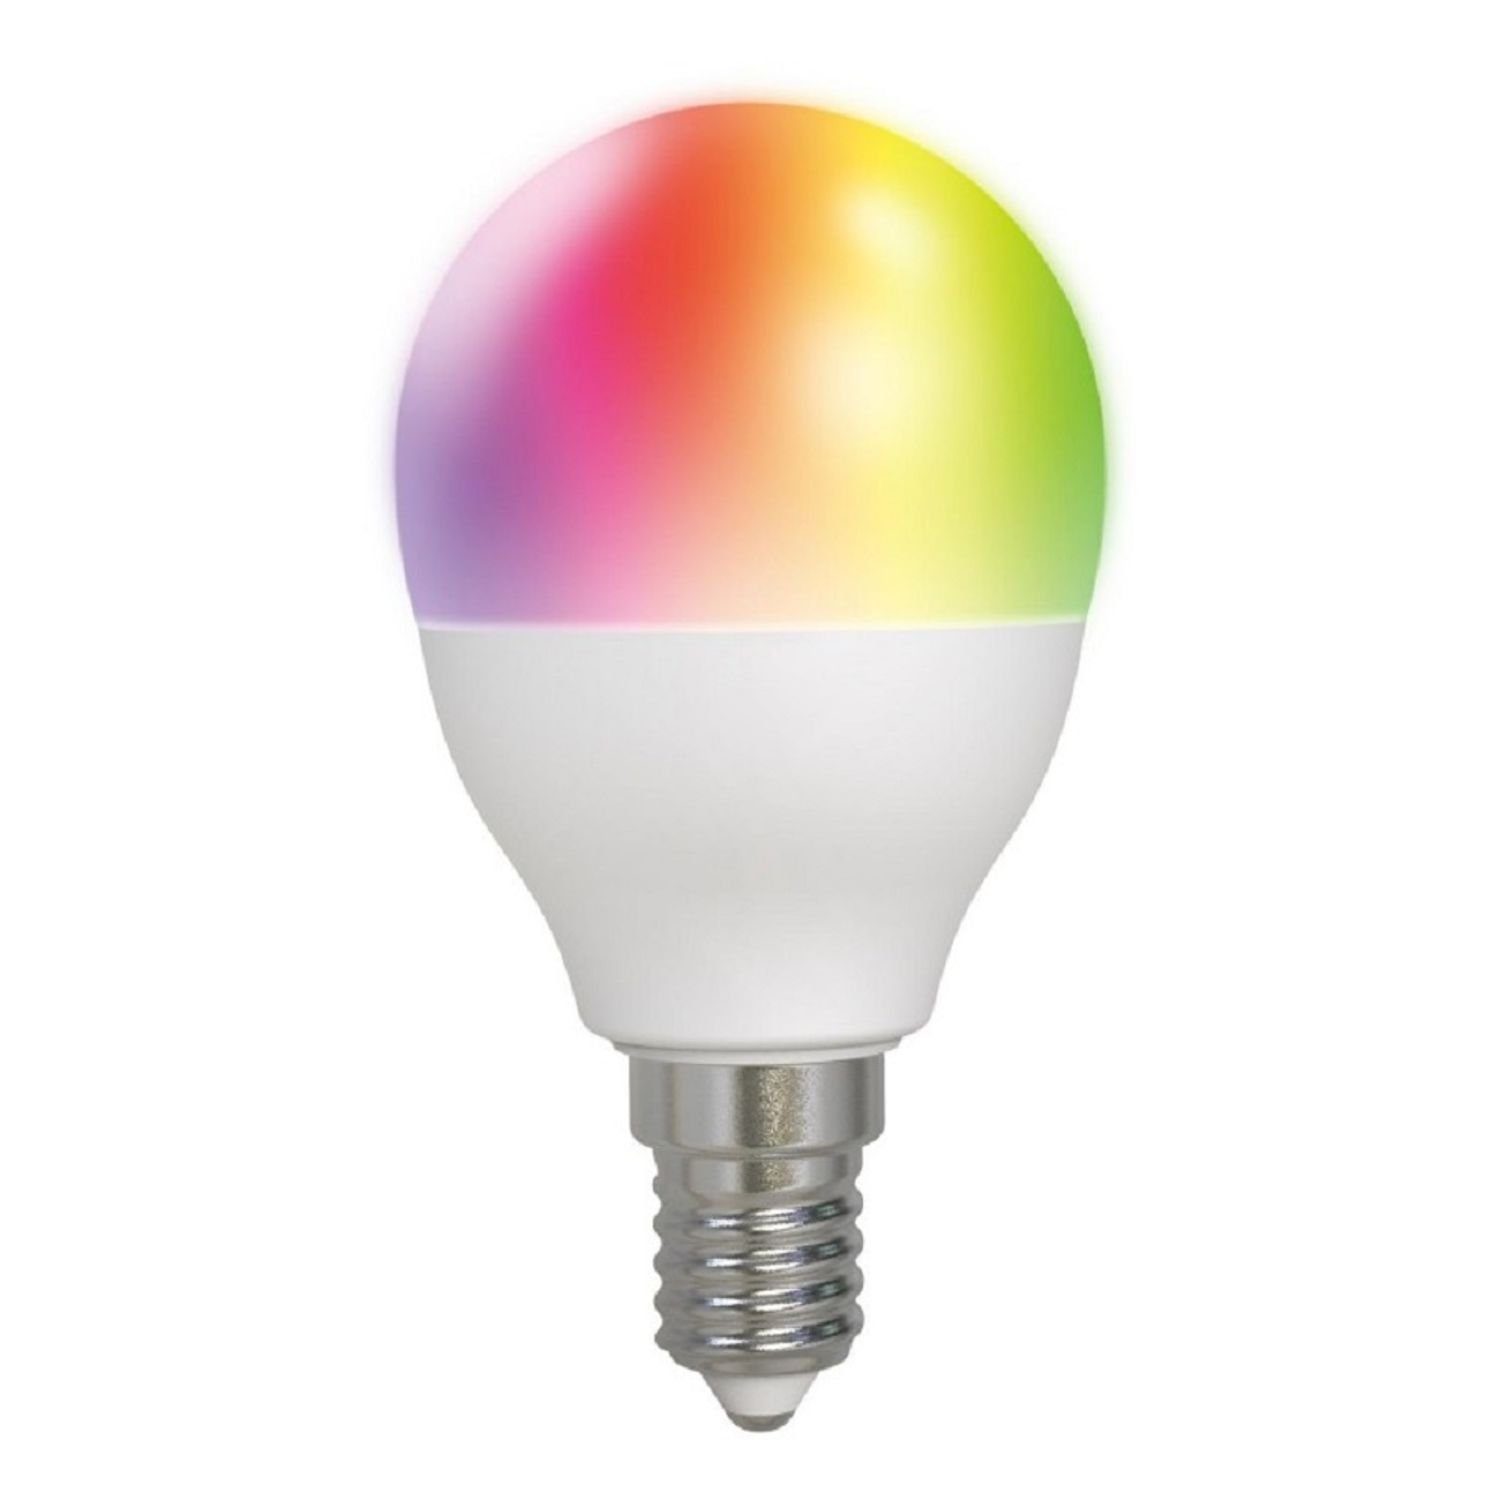 DELTACO SMART HOME LED-Leuchtmittel SH-LE14G45RGB Smarte LED Birne für E14-Sockel 5W dimmbar RGB, E14, inkl. 5 Jahre Herstellergarantie